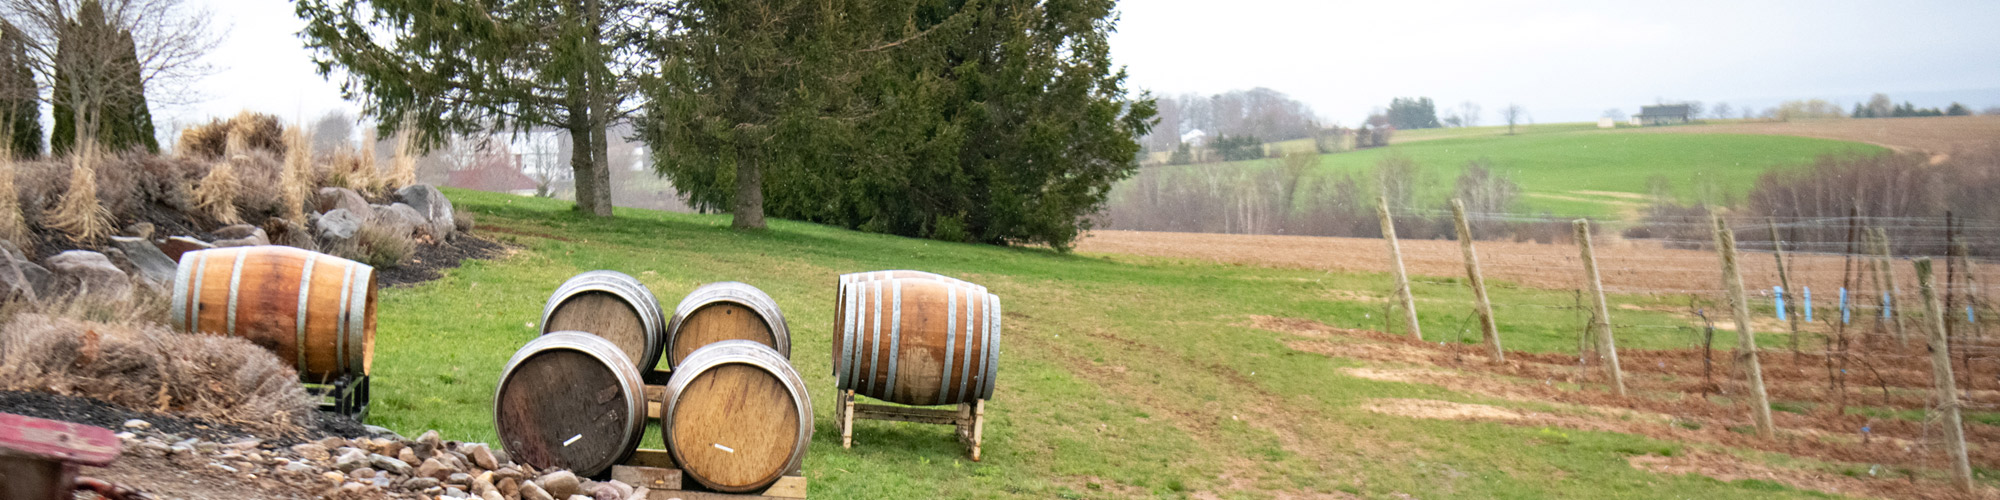 Wooden wine barrels sitting on a lawn.